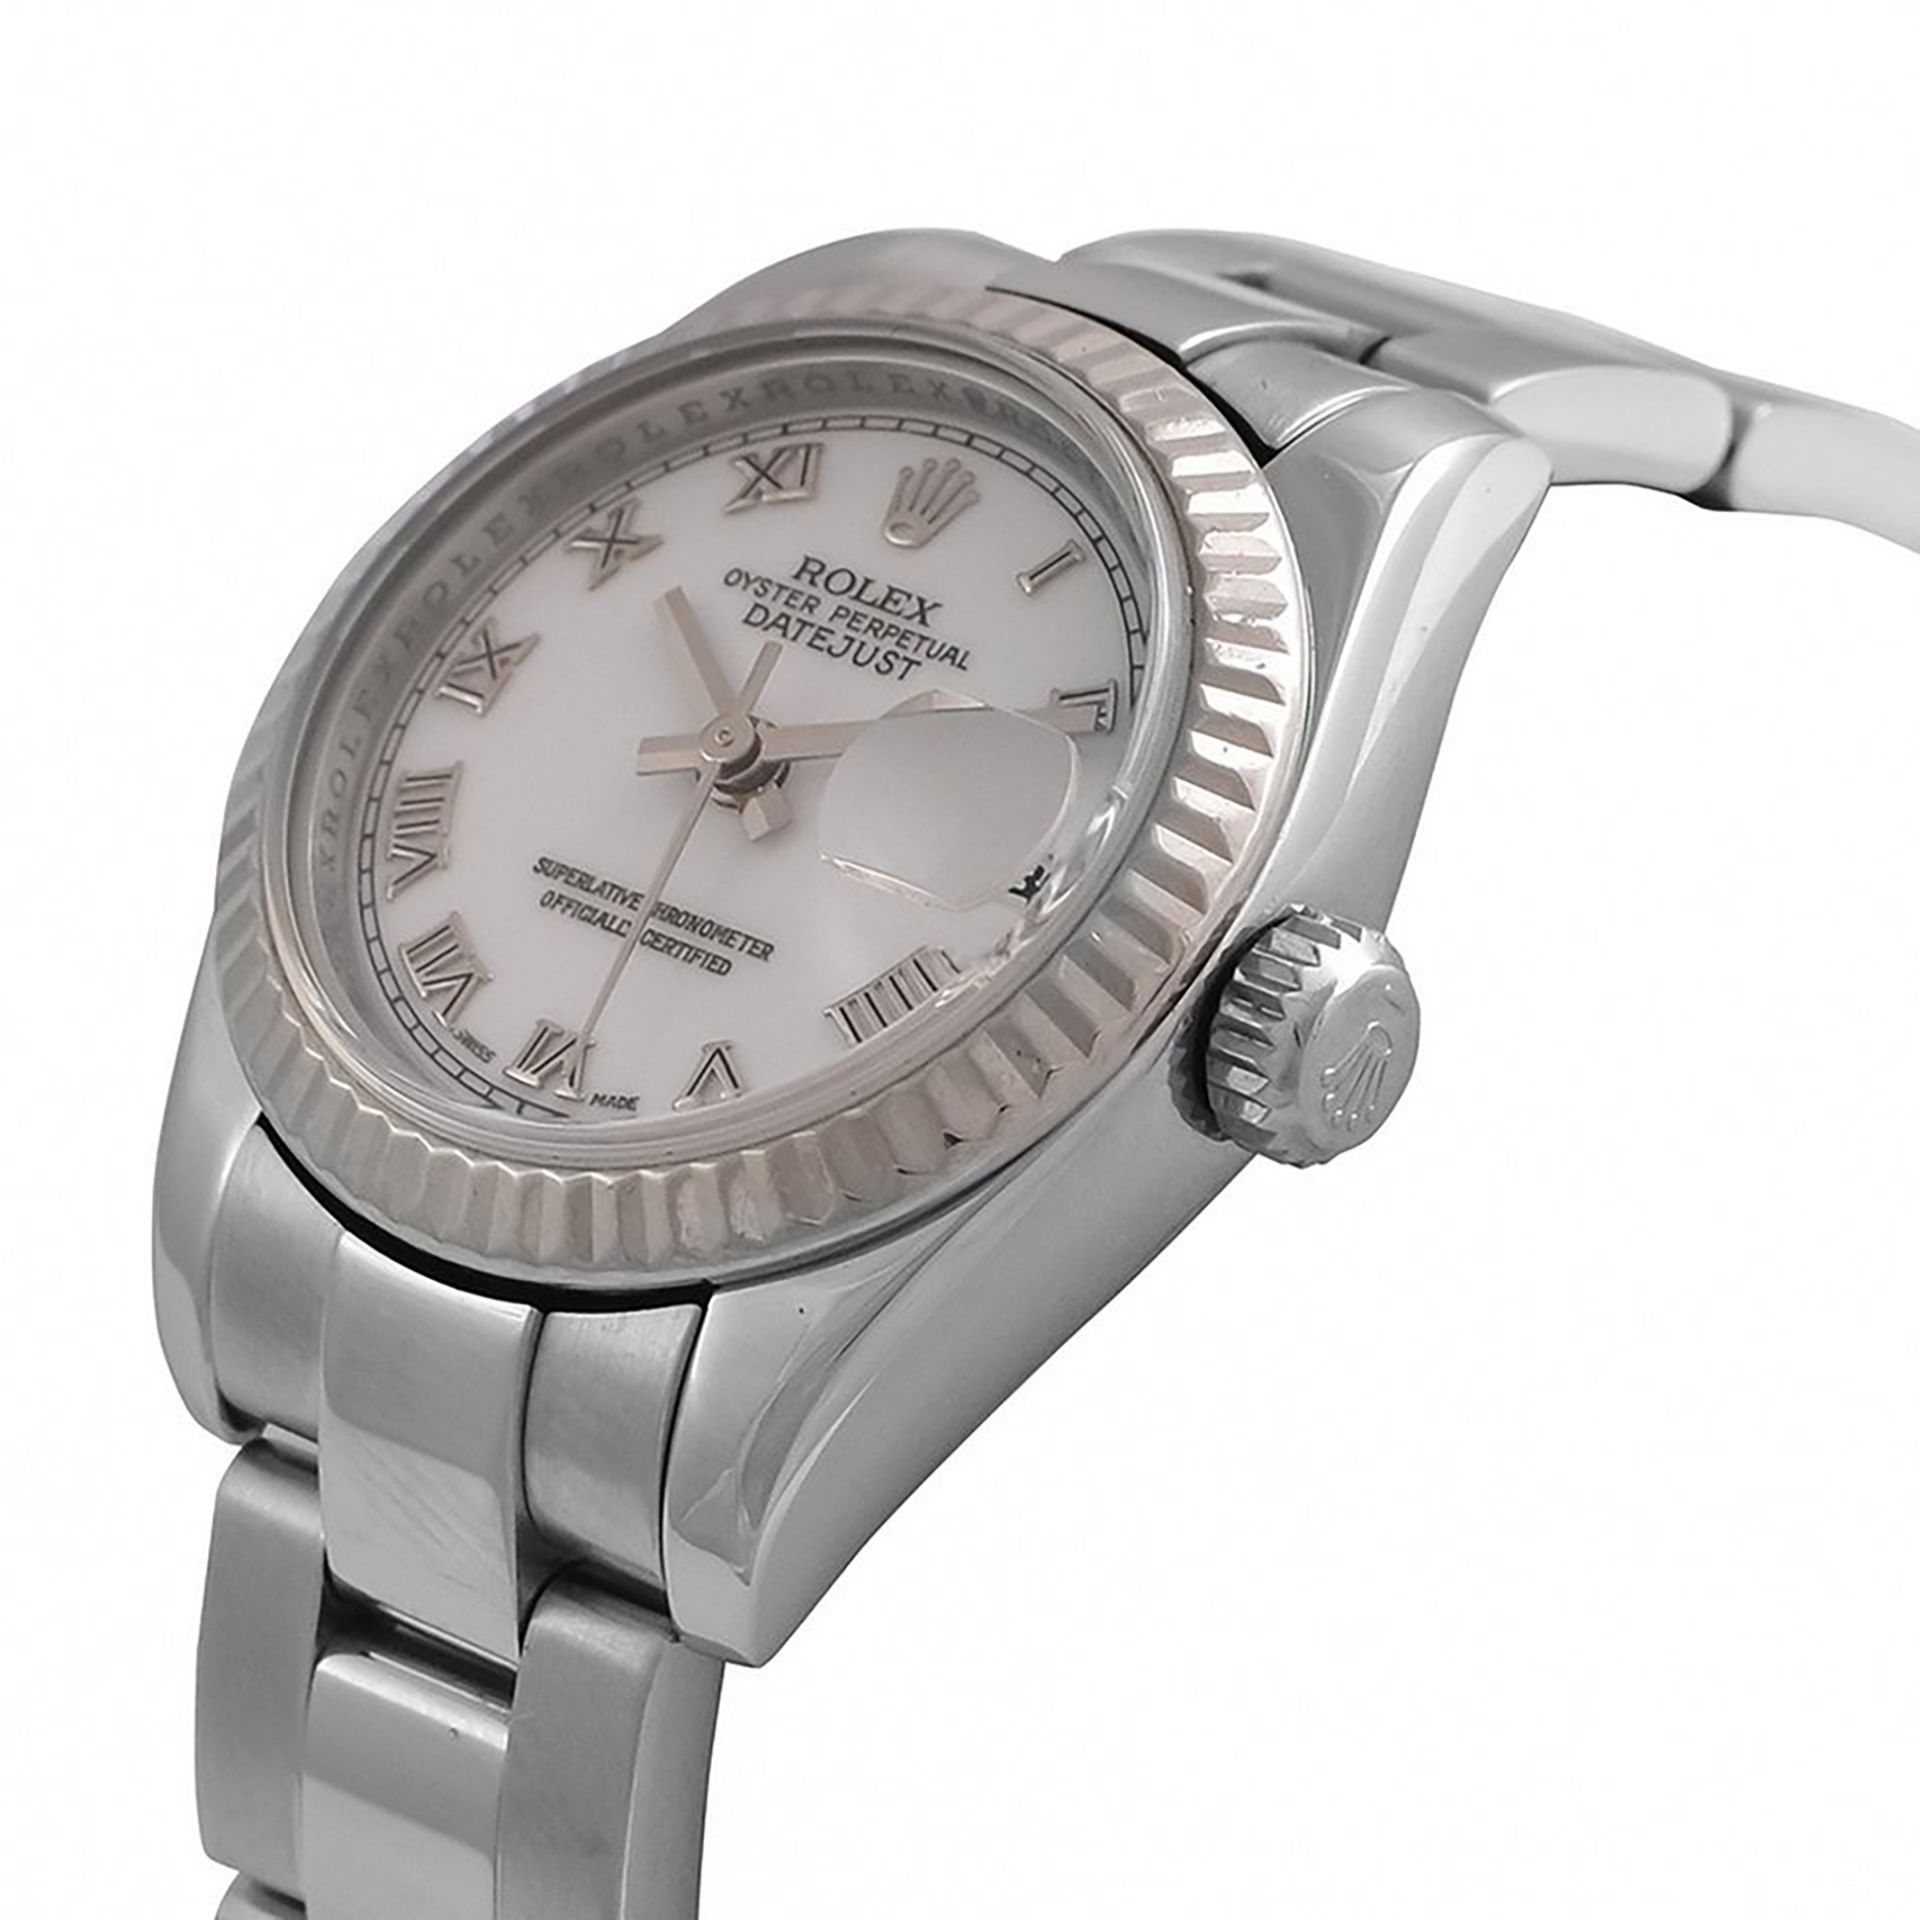 Rolex Lady Datejust wristwatch, year 2006 - Image 2 of 6